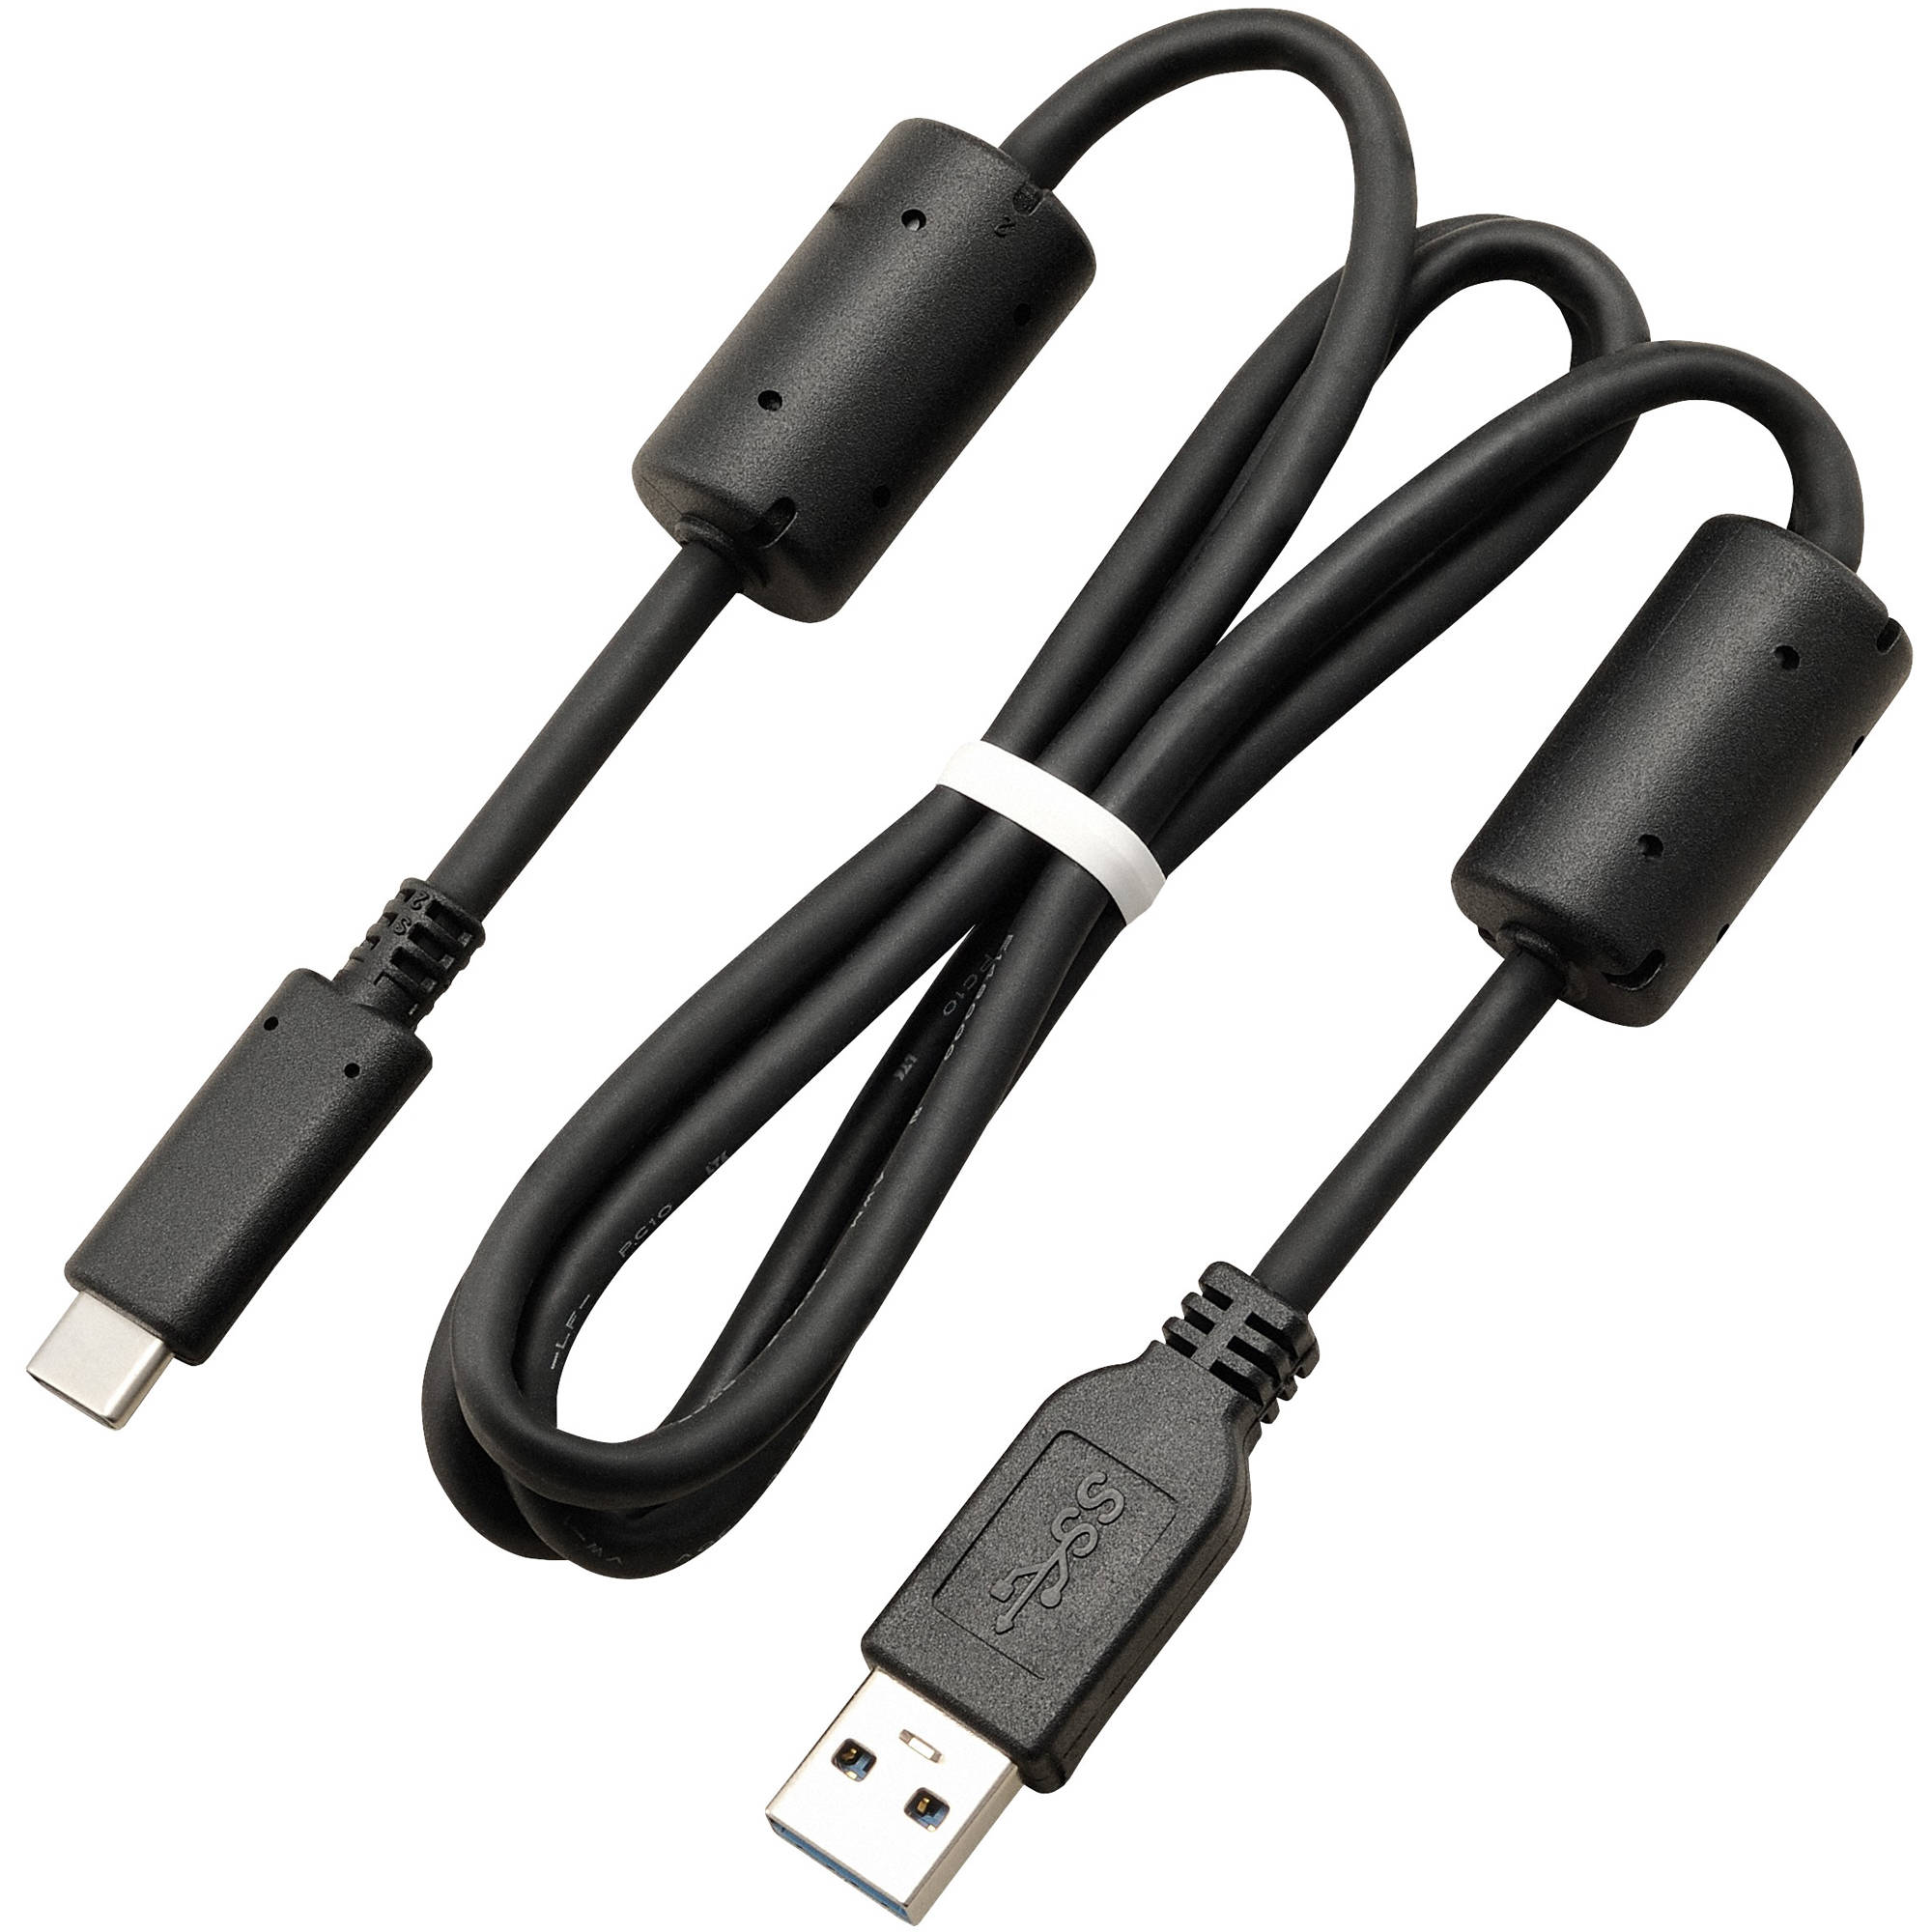 CC-1 USB Cable holder for E-M1 Mark II